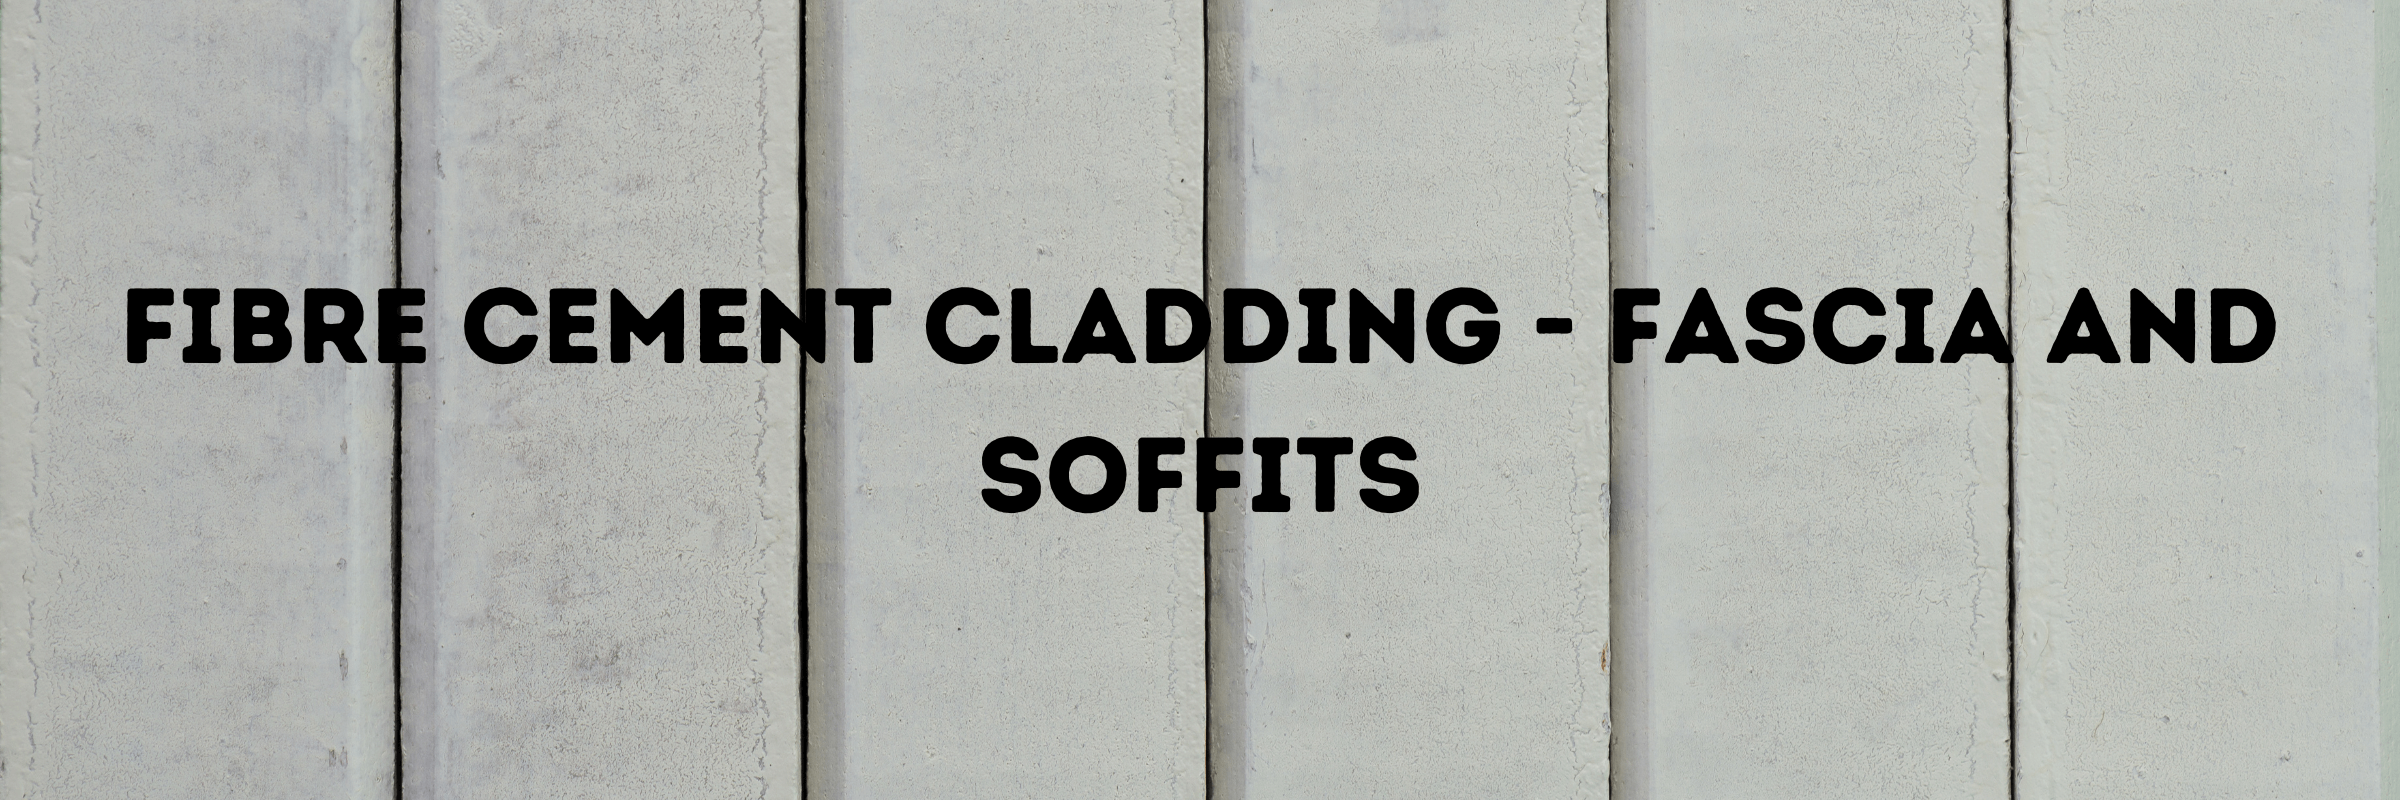 Fibre Cement Cladding - Fascia and soffits (1)